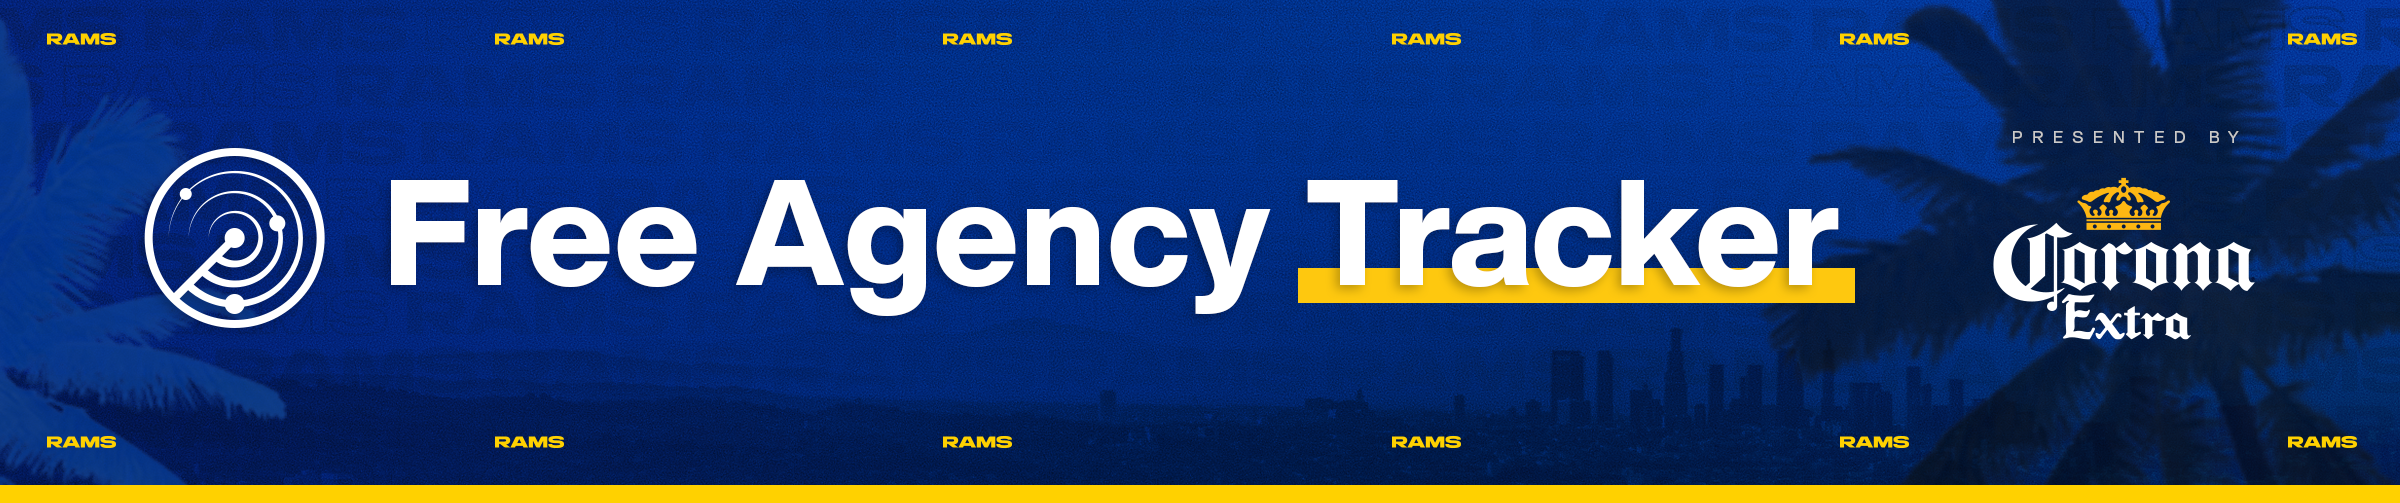 Rams Free Agency Tracker  Los Angeles Rams 